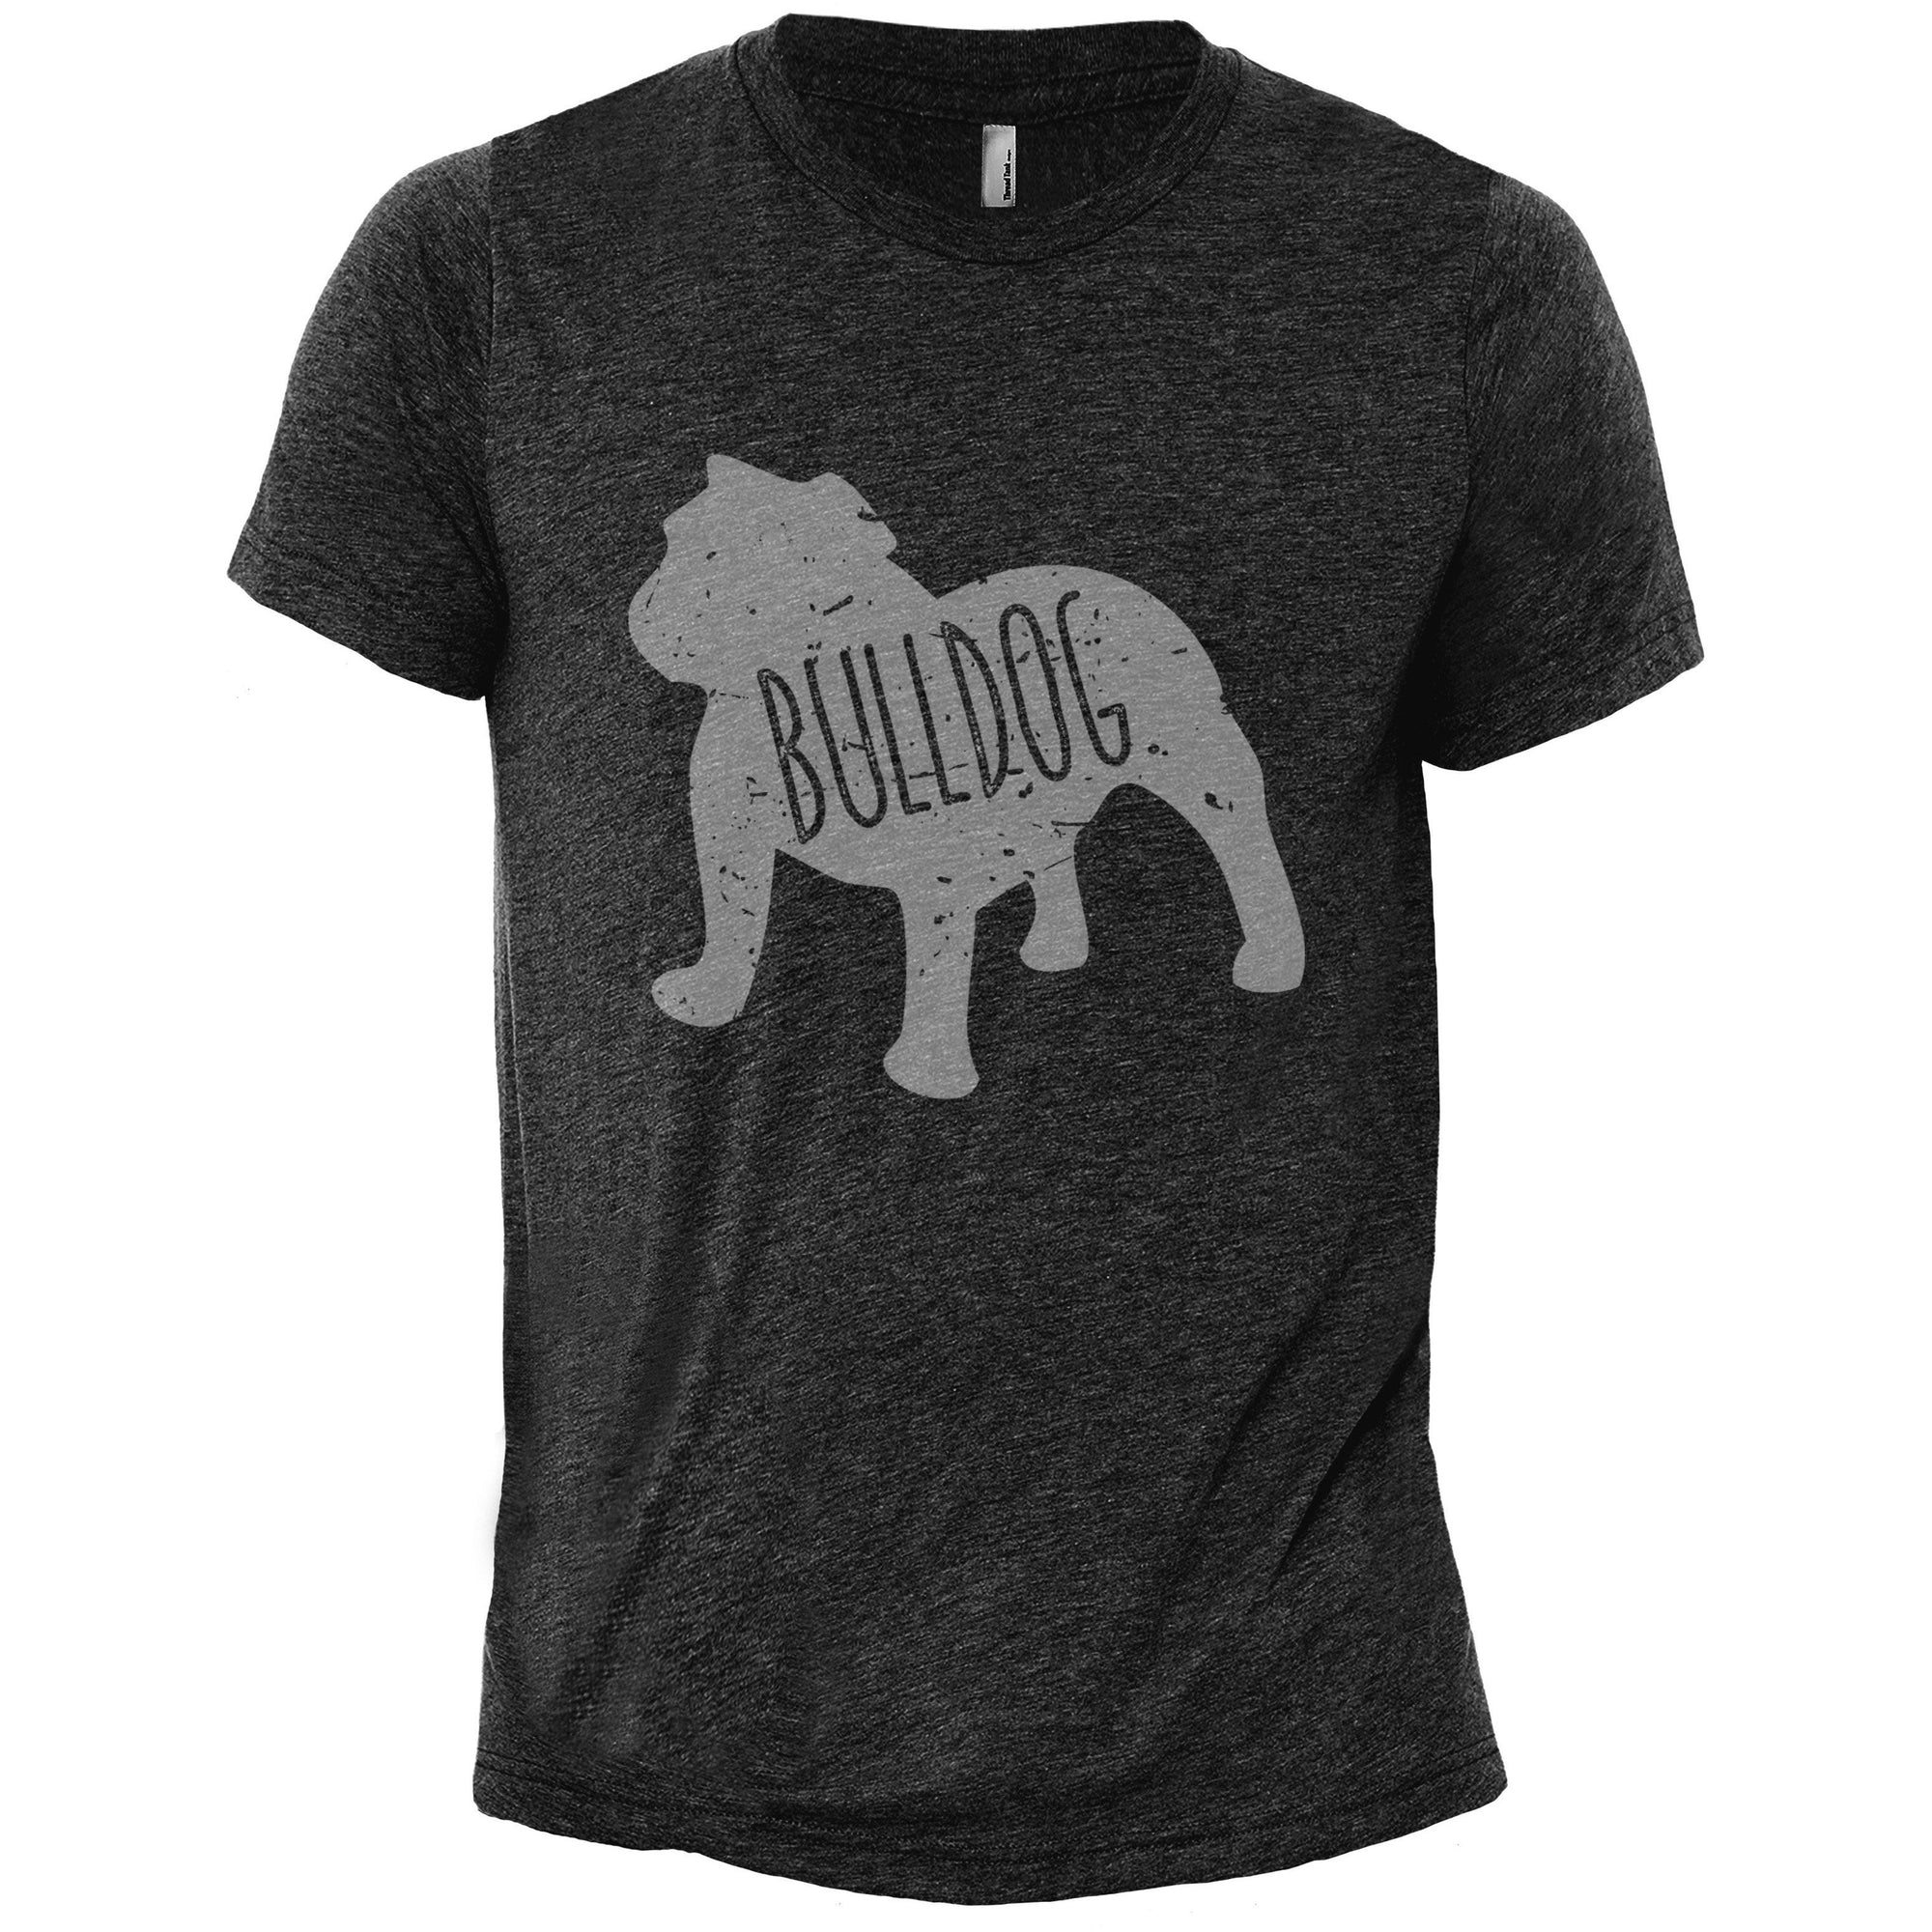 Bulldog Dog Silhouette Heather Grey Printed Graphic Men's Crew T-Shirt Tee